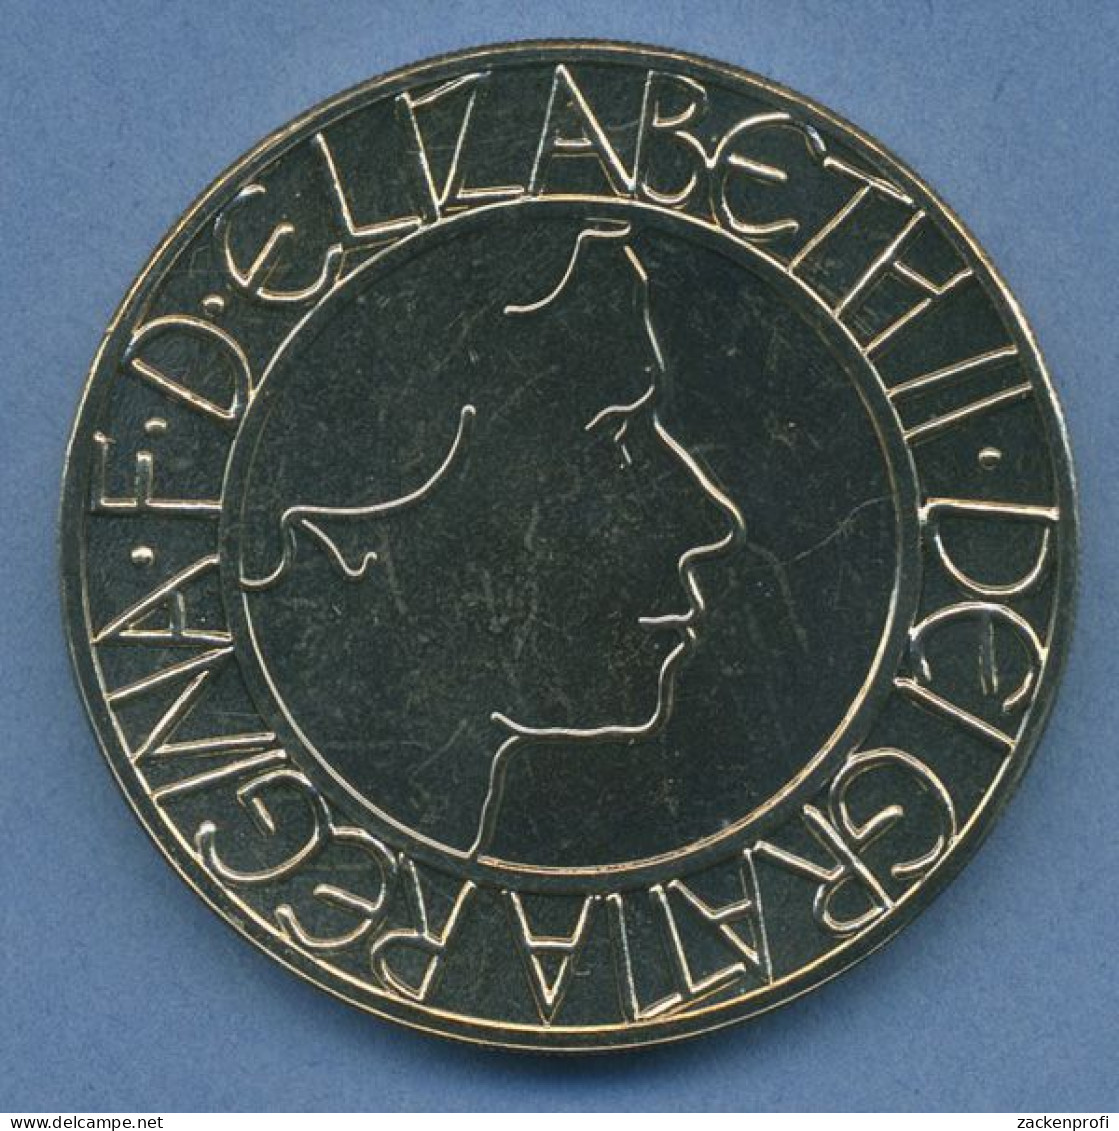 Großbritannien 5 Pounds 2003, Königin Elisabeth II. KM 1038 Vz/st (m4720) - 5 Pounds